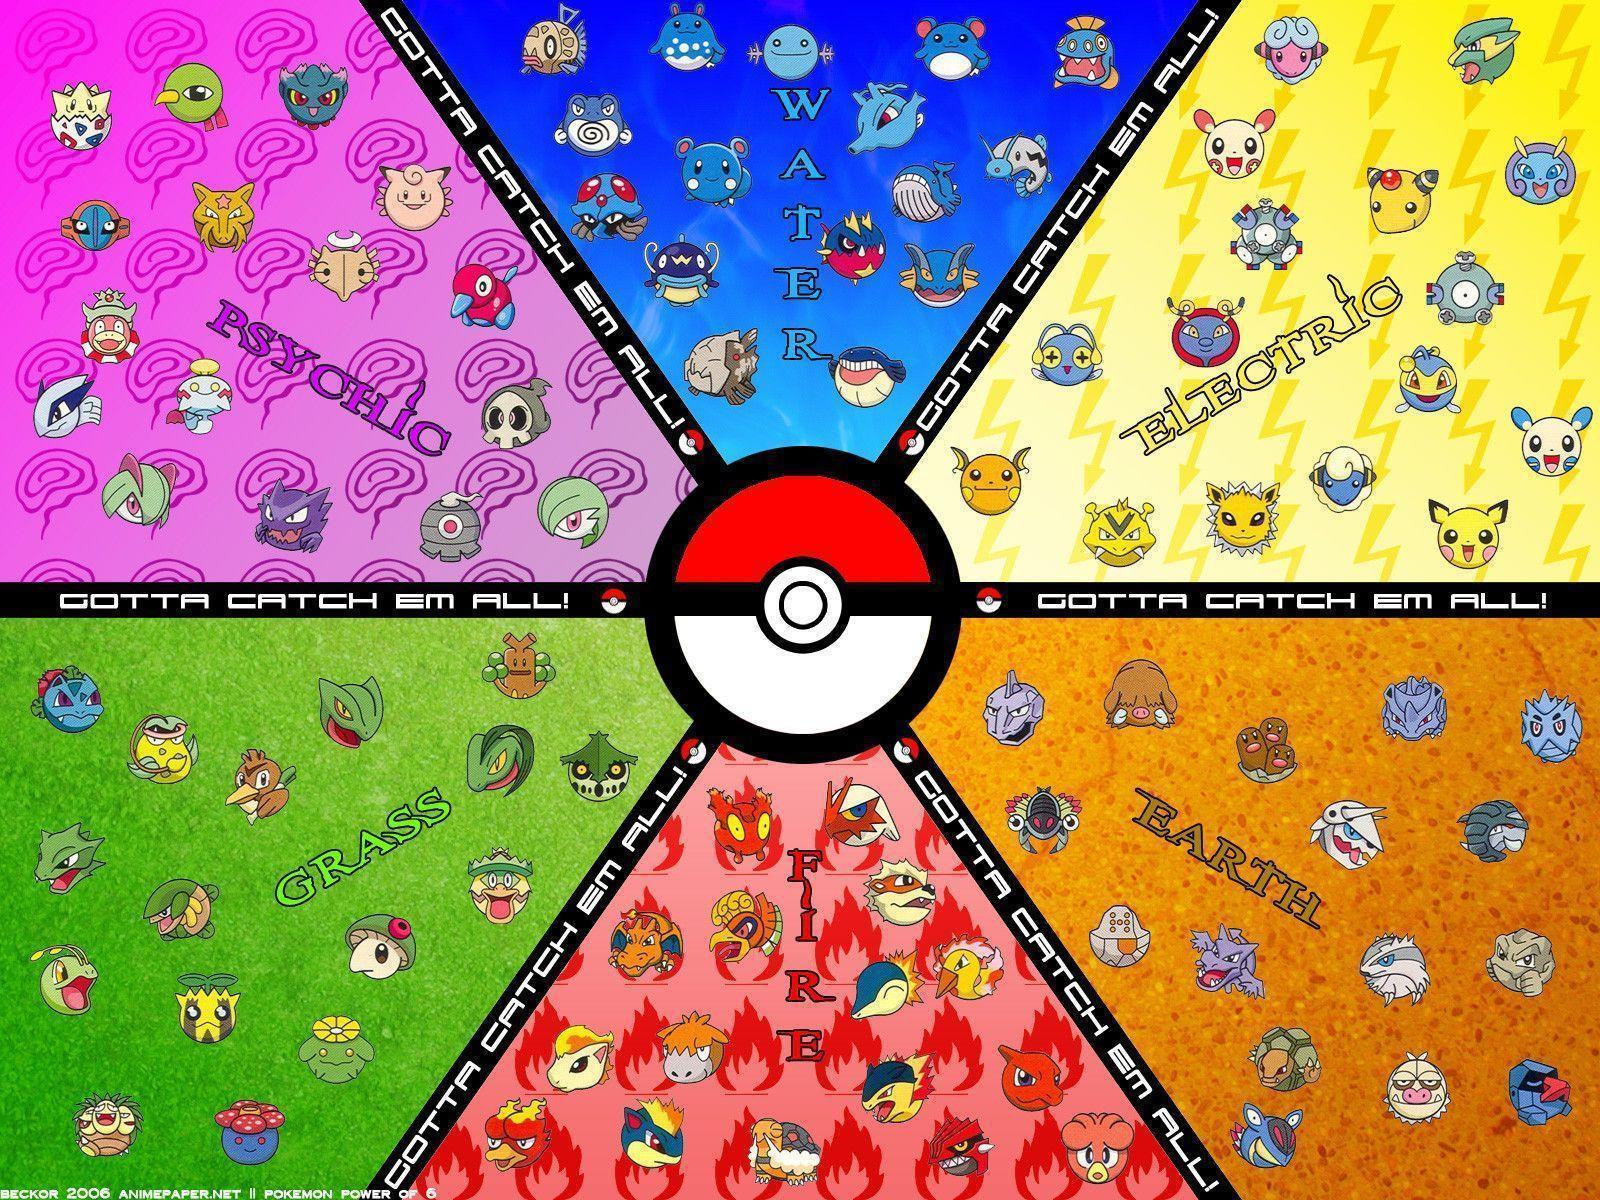 Download Pokemon Characters List Wallpaper 1600x1200. Full HD